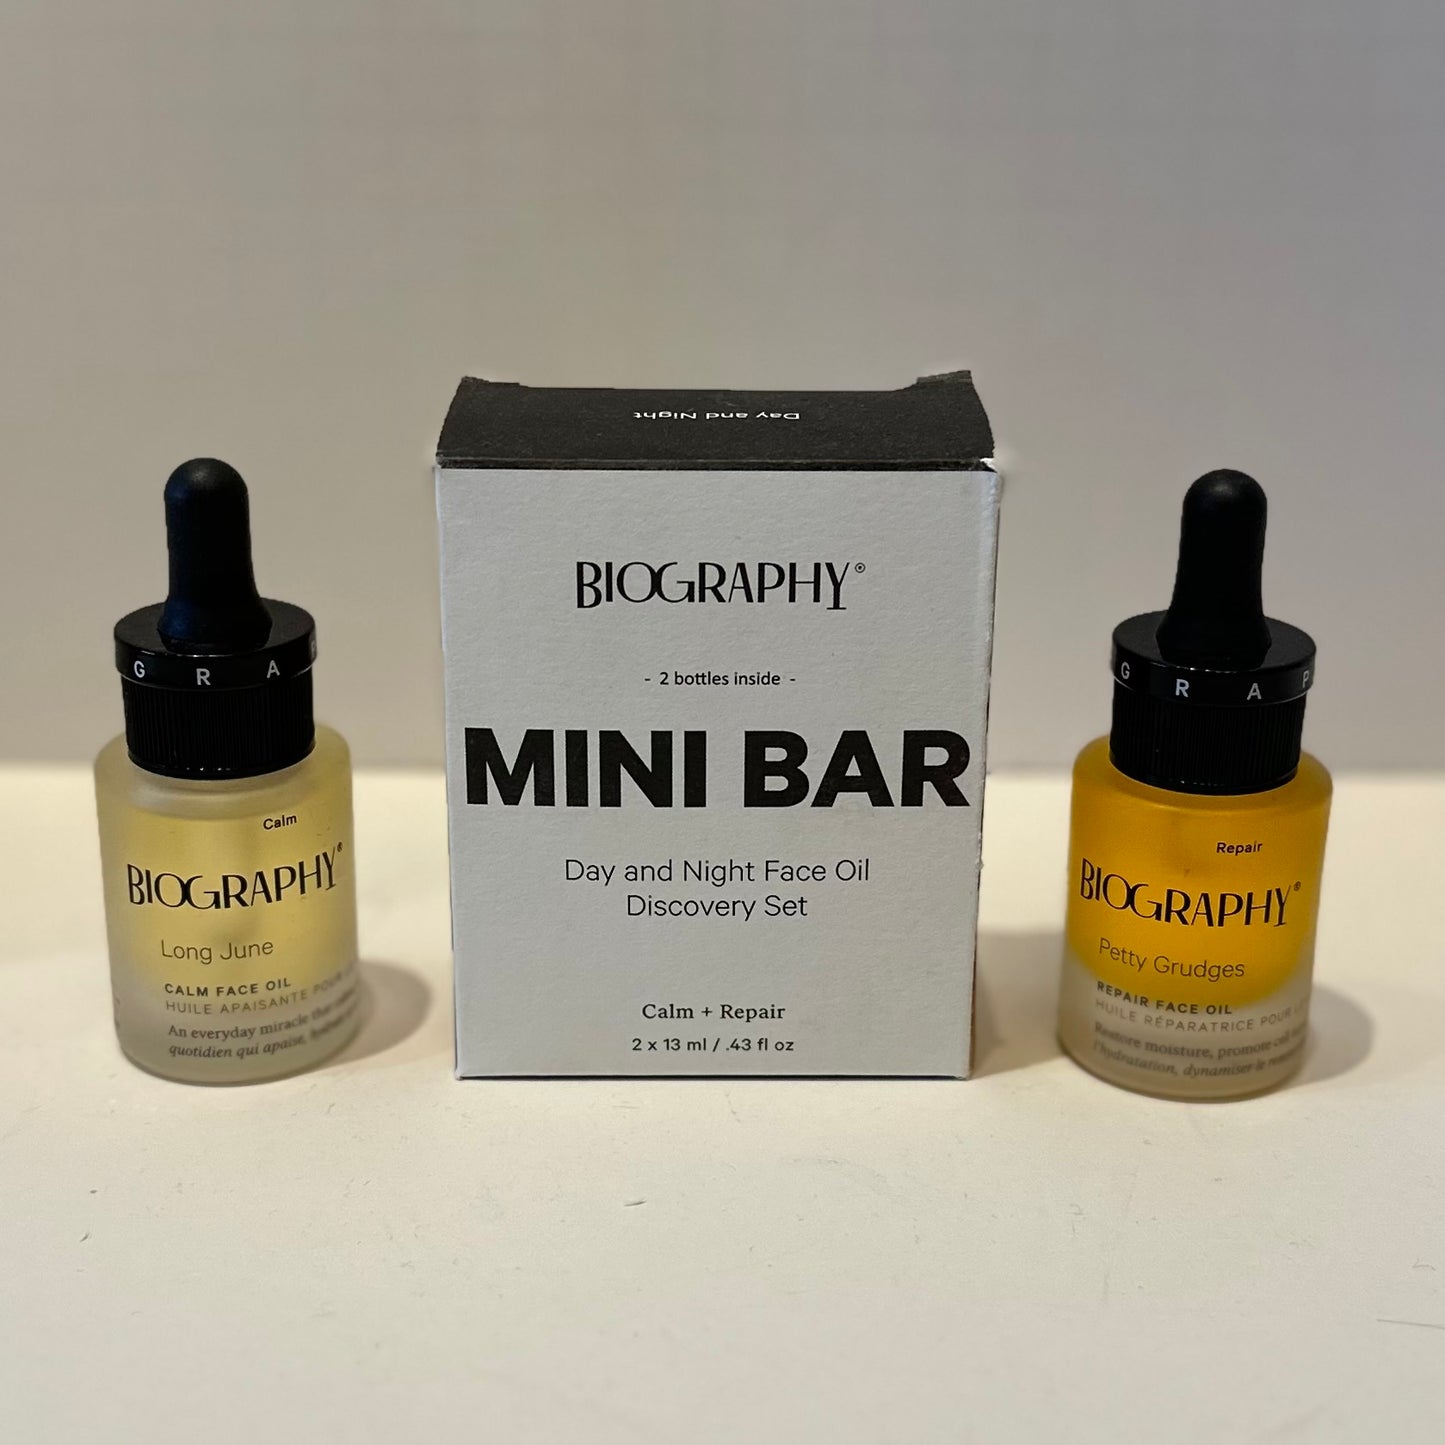 BIOGRAPHY Mini Bar Face Oils